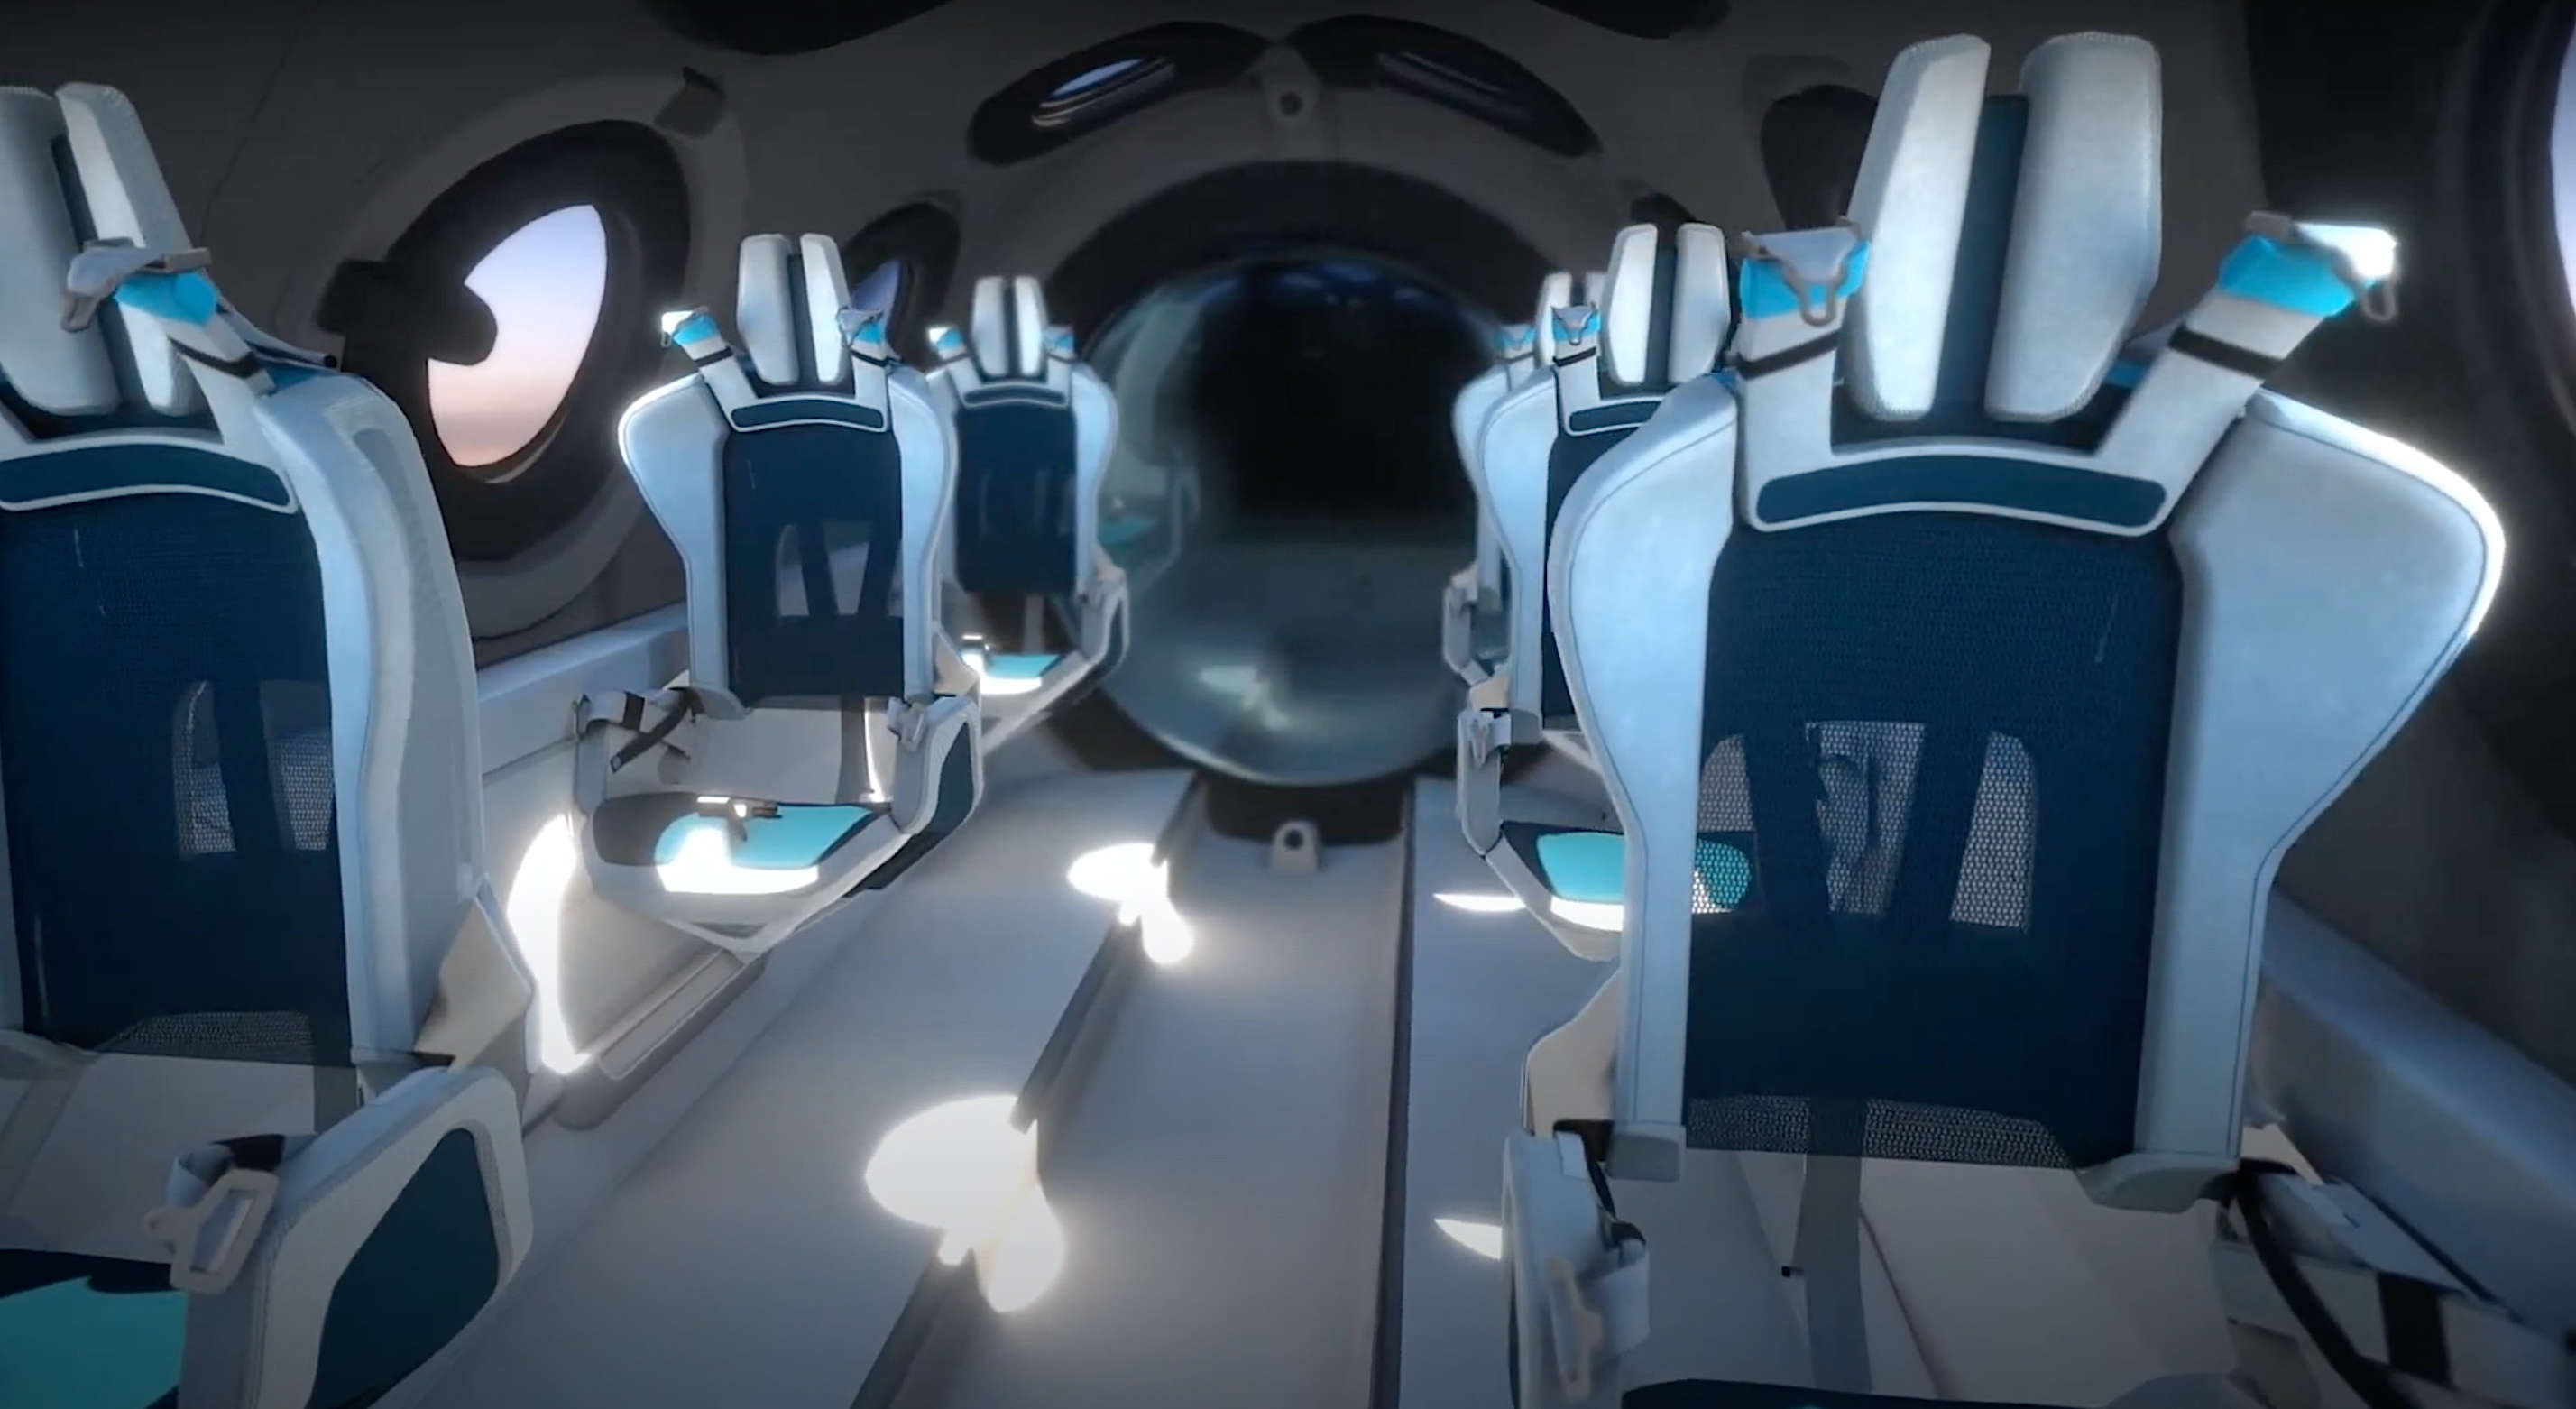 Virgin Galactic SpaceShipTwo Unity cabin interior